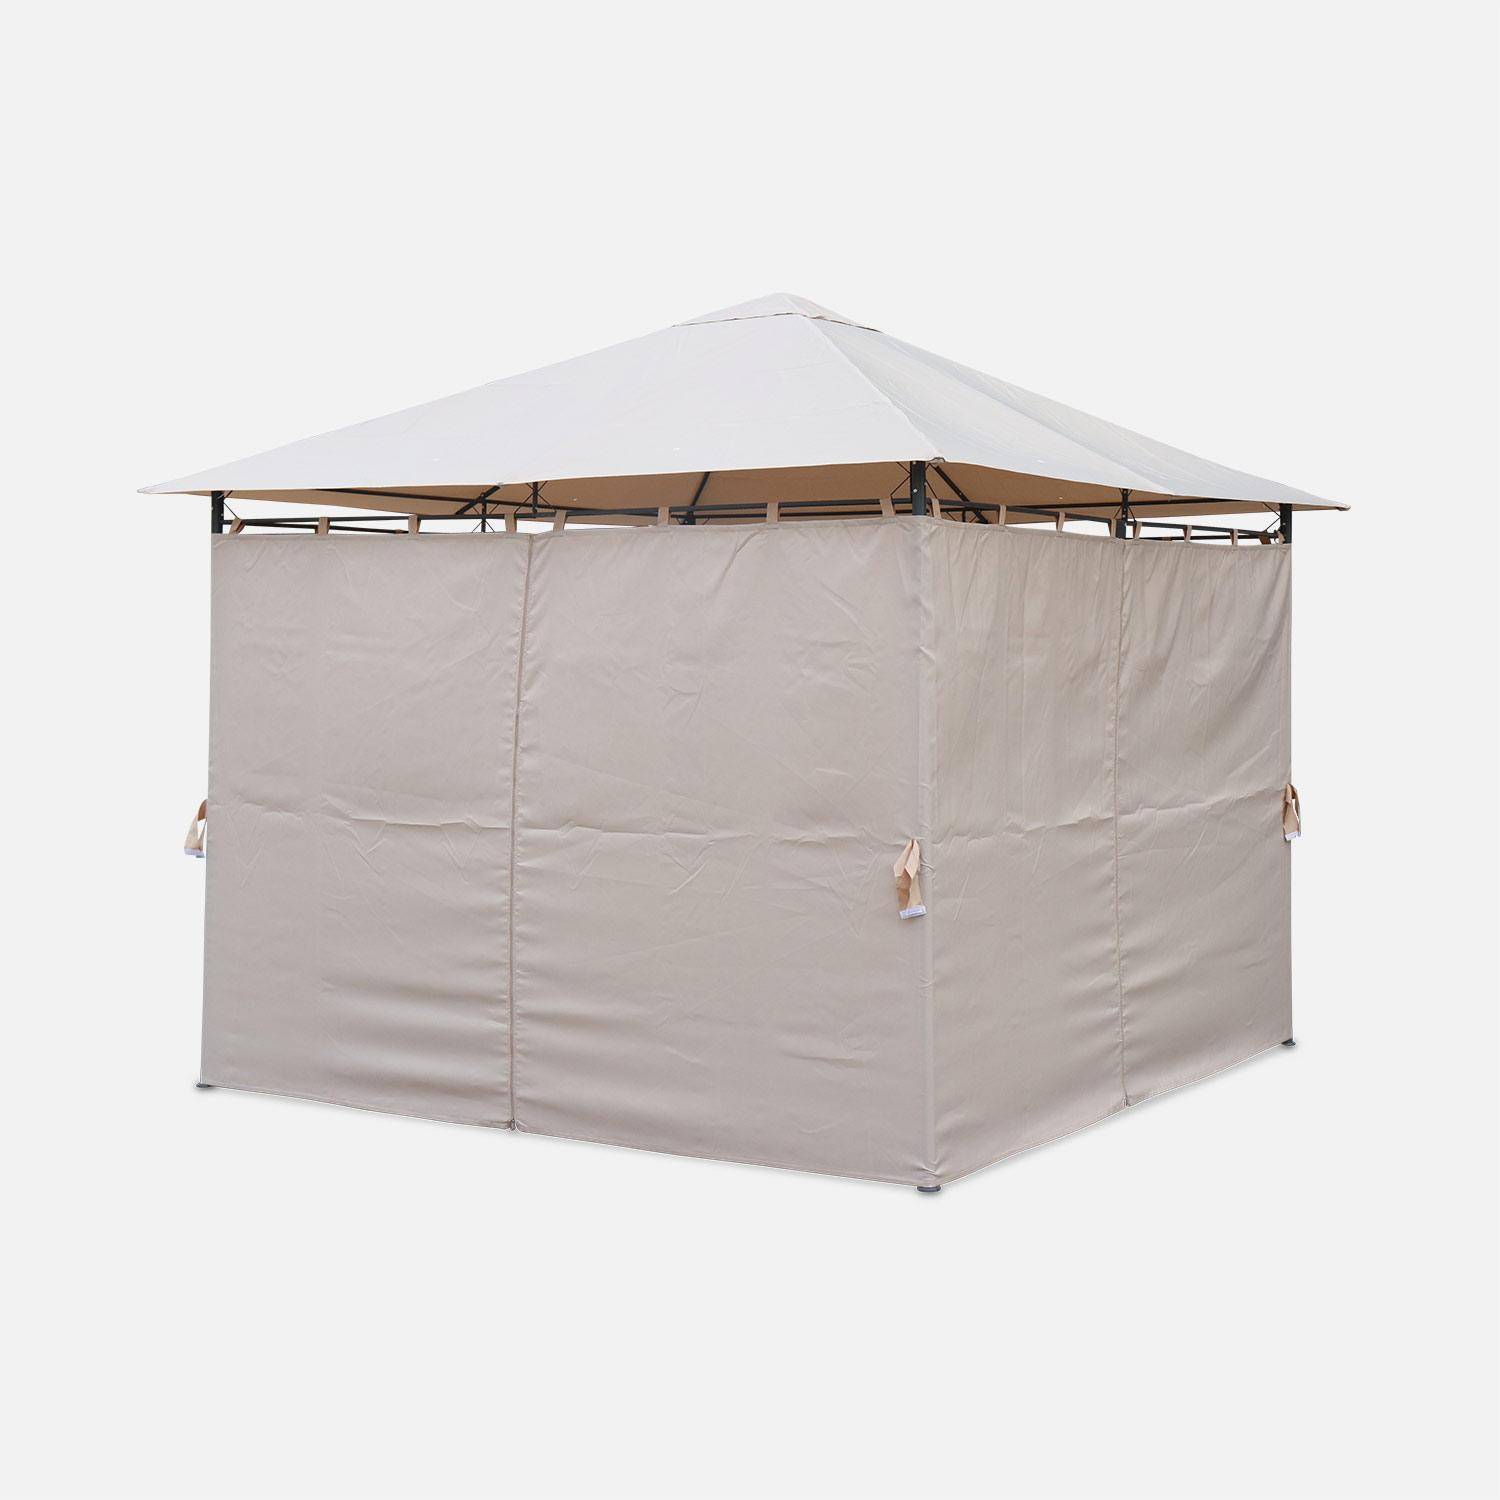 Pergolato 3x3 m - Elusa - Telo beige - Pergola con tende, tenda da giardino, barnum, tensostruttura, ricevimento Photo3